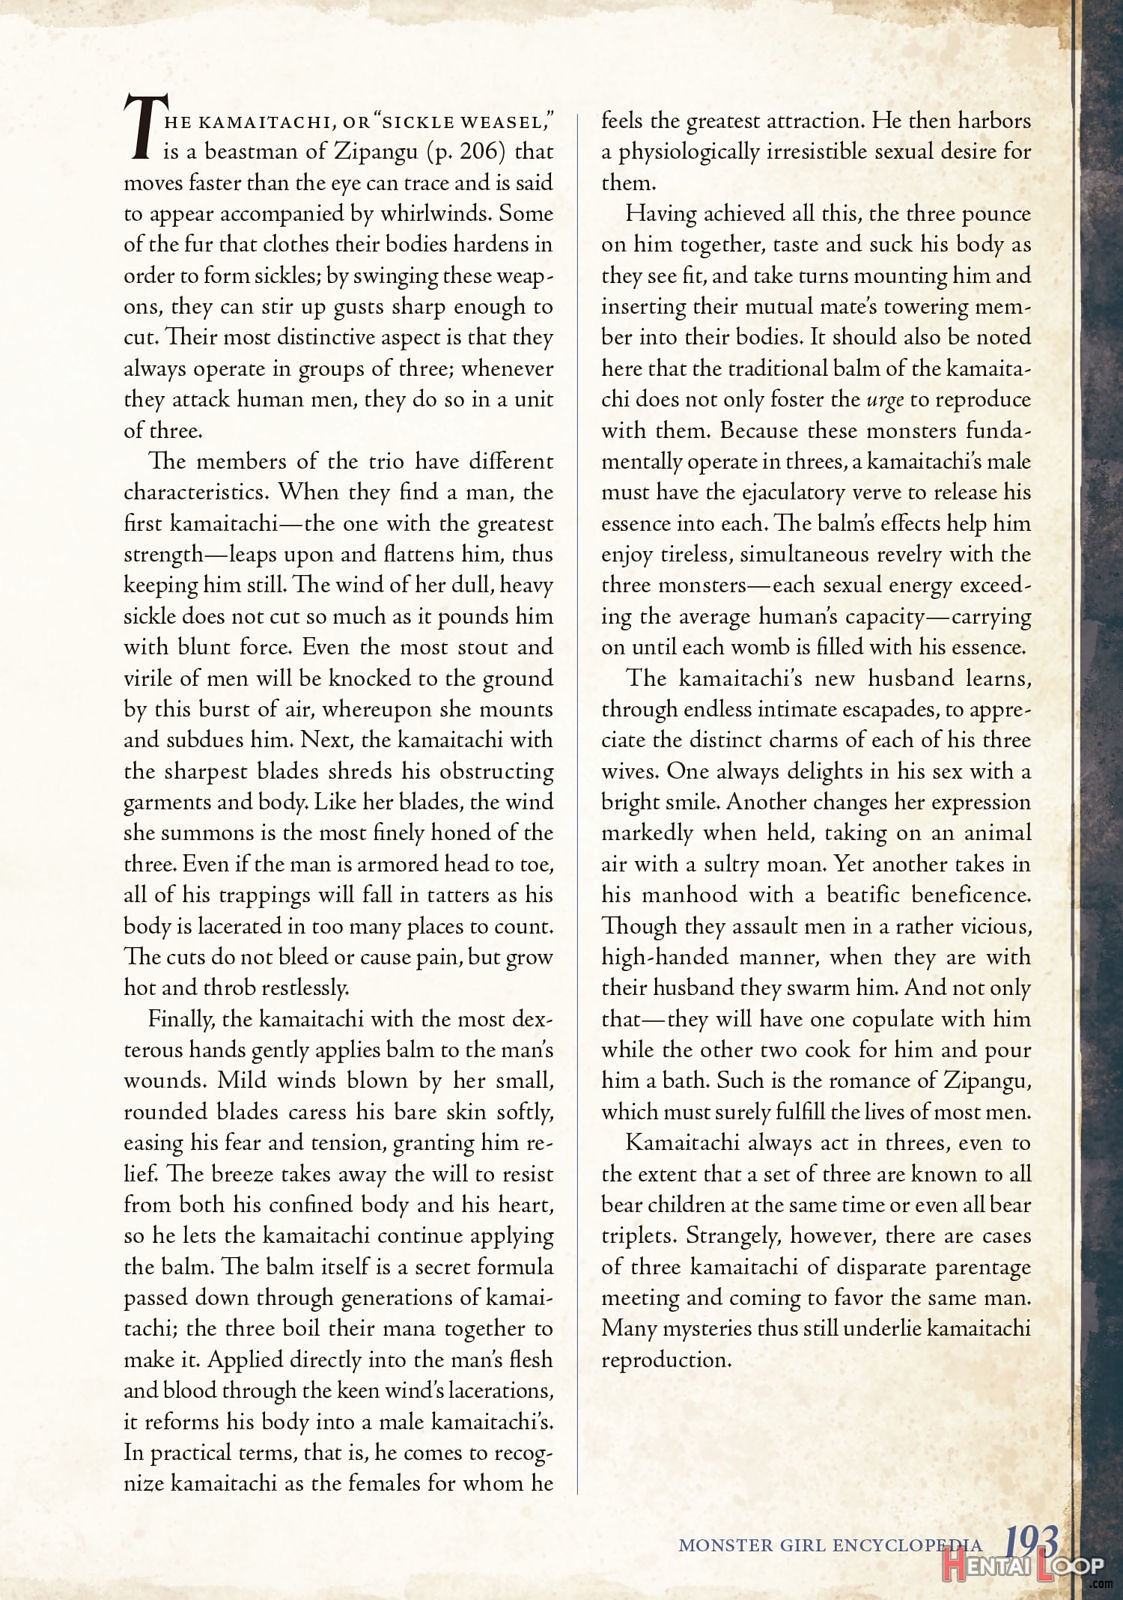 Monster Girl Encyclopedia Vol. 2 page 194